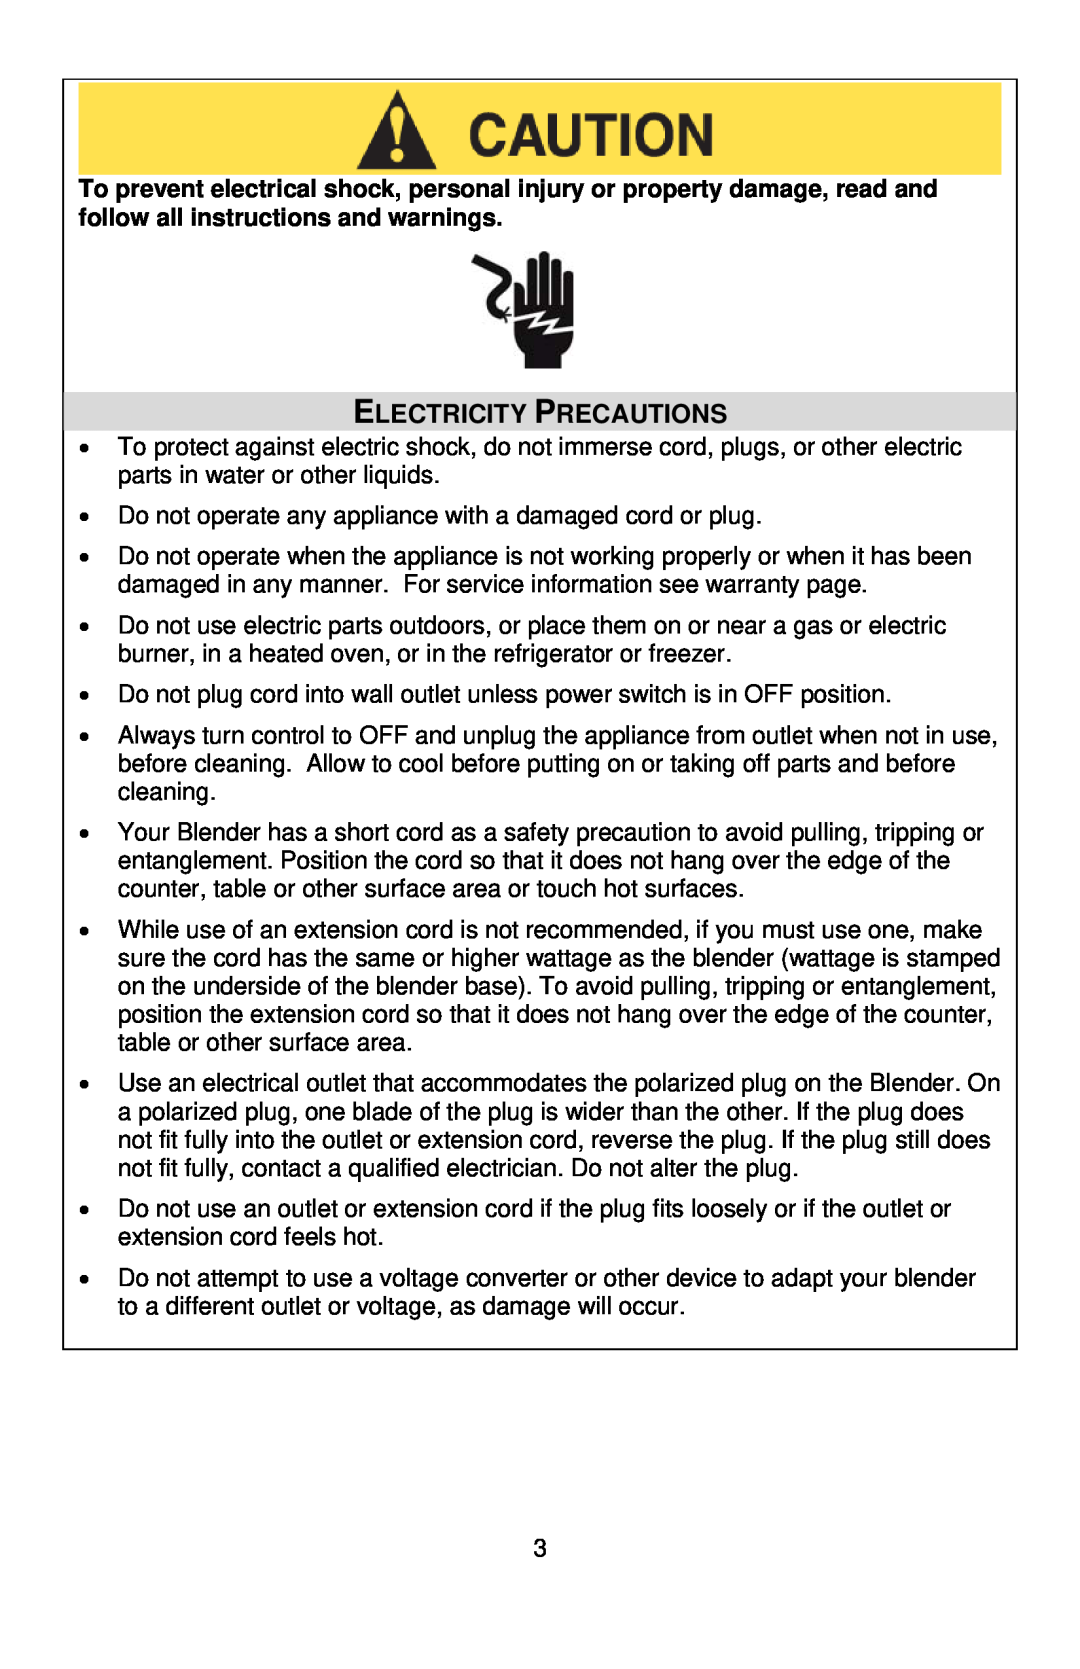 West Bend Blender instruction manual Electricity Precautions 